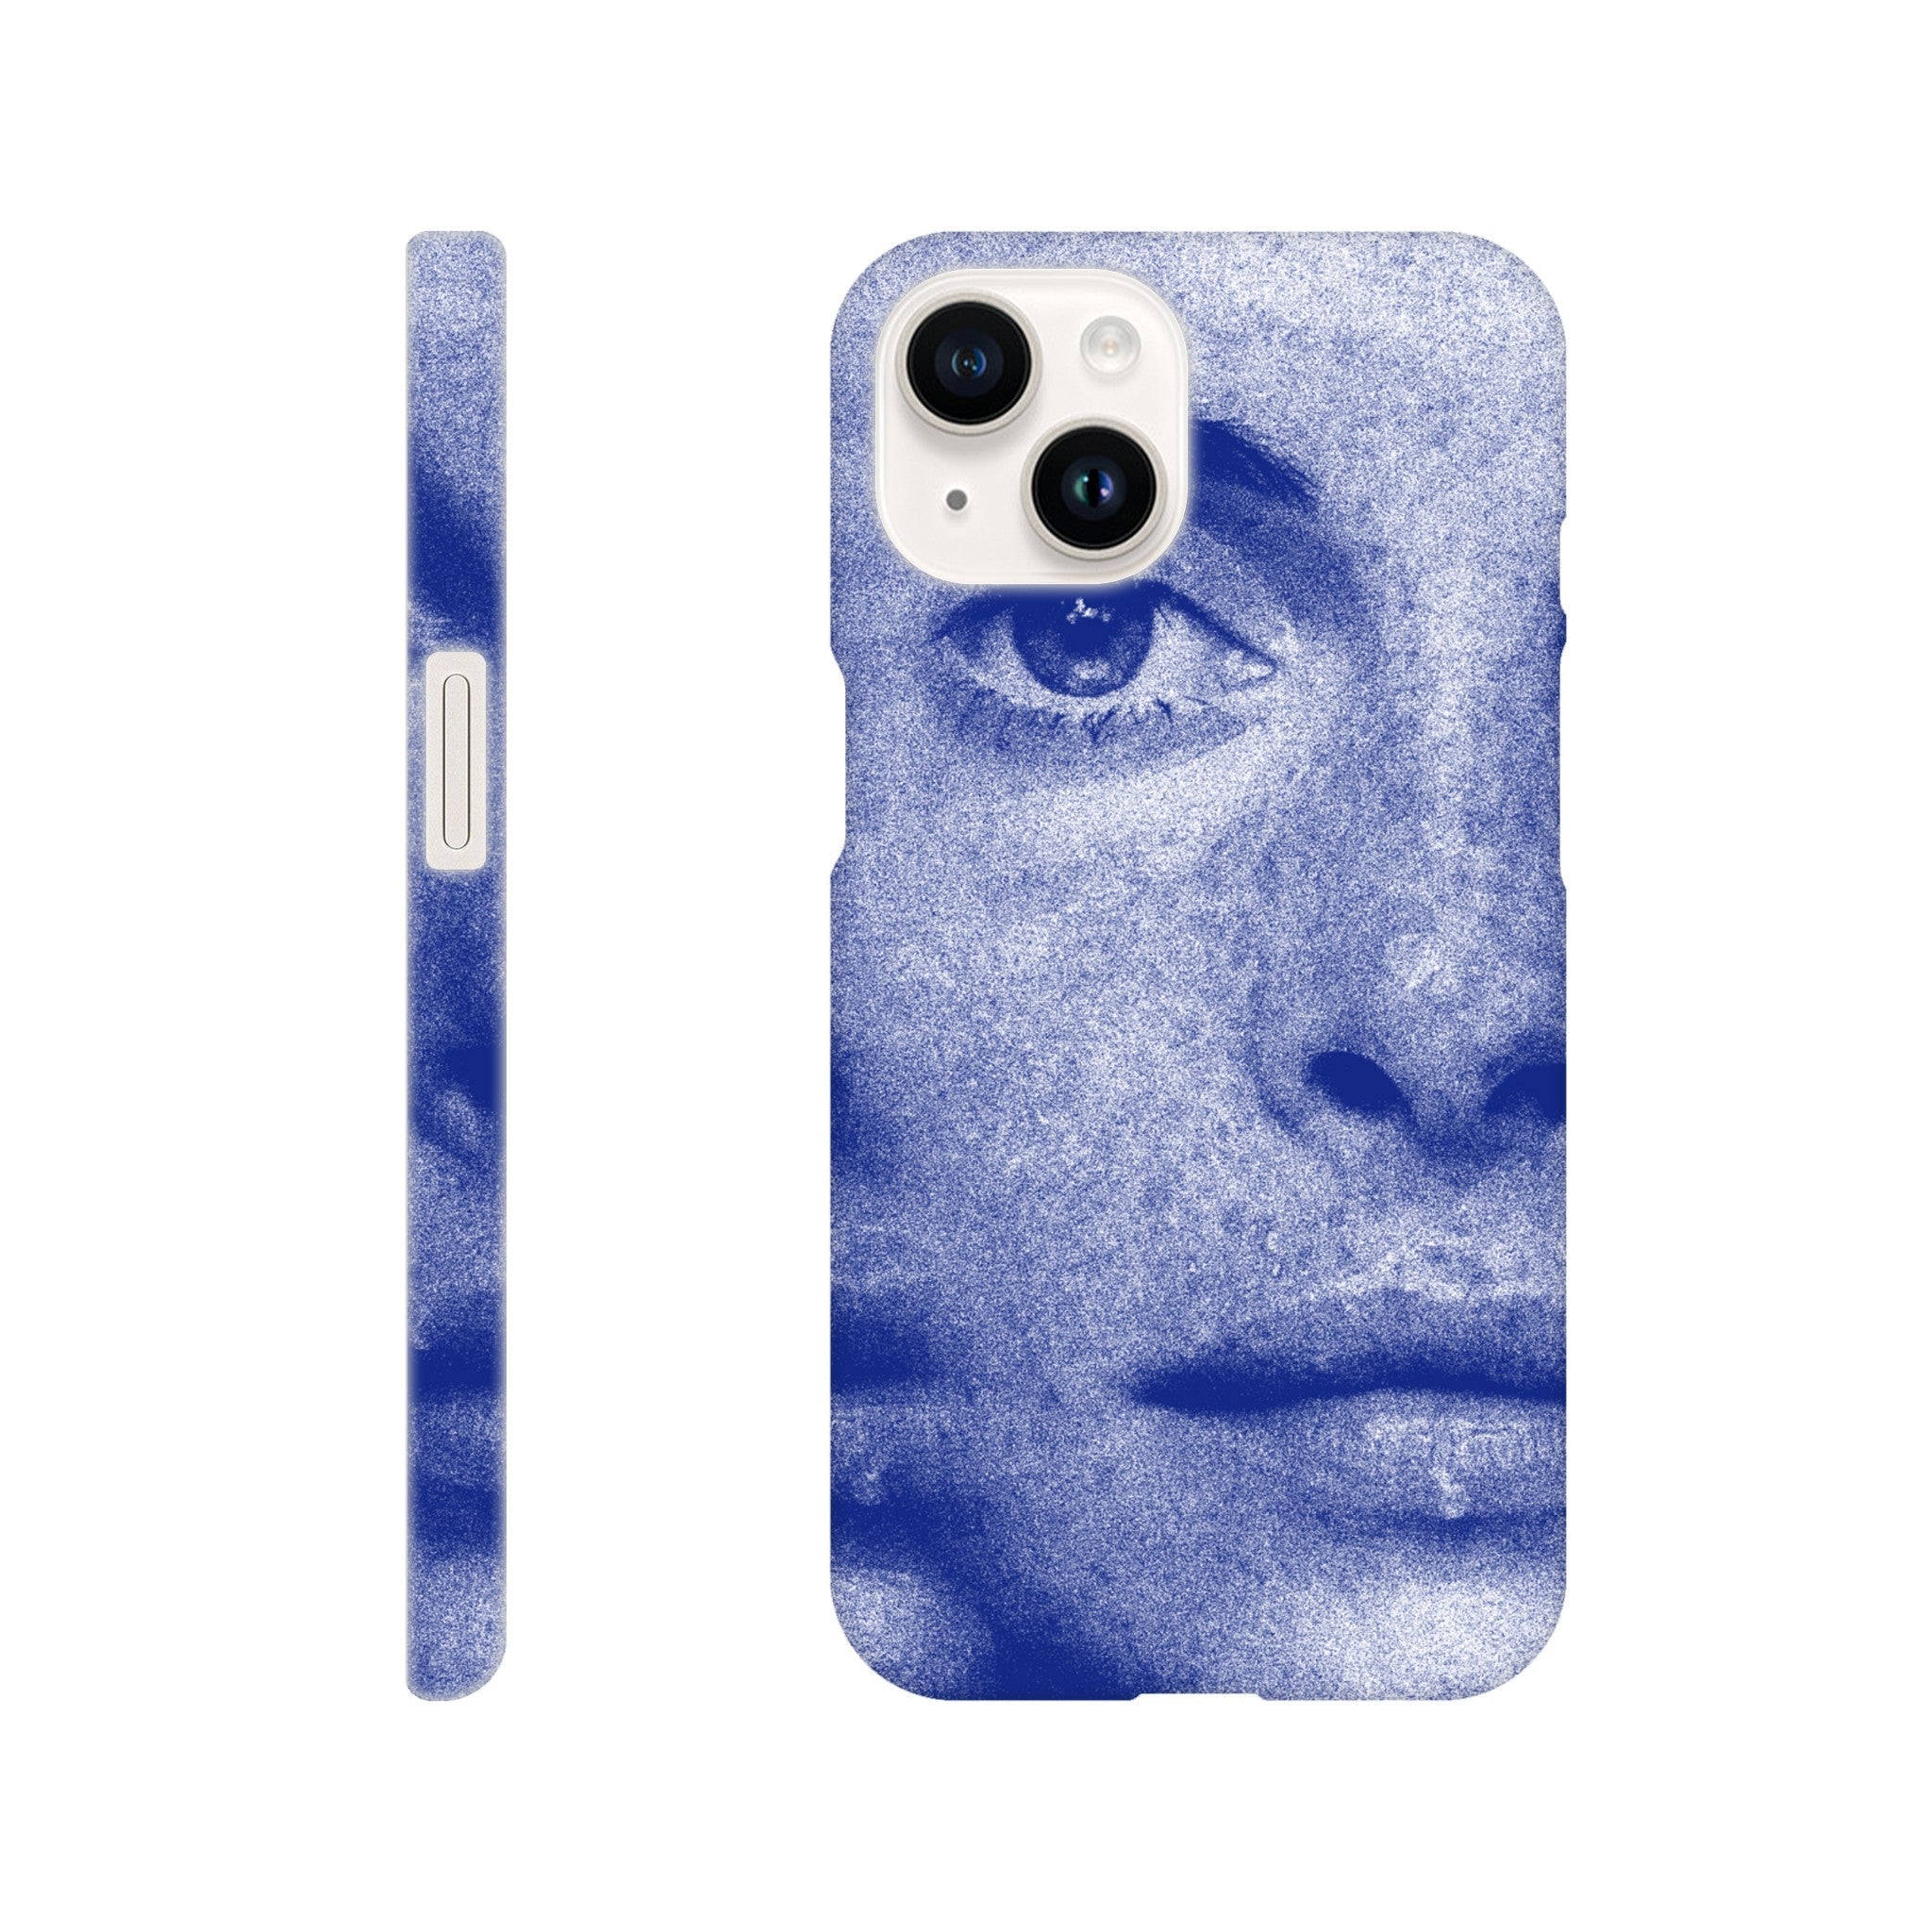 'Freckles' phone case - In Print We Trust